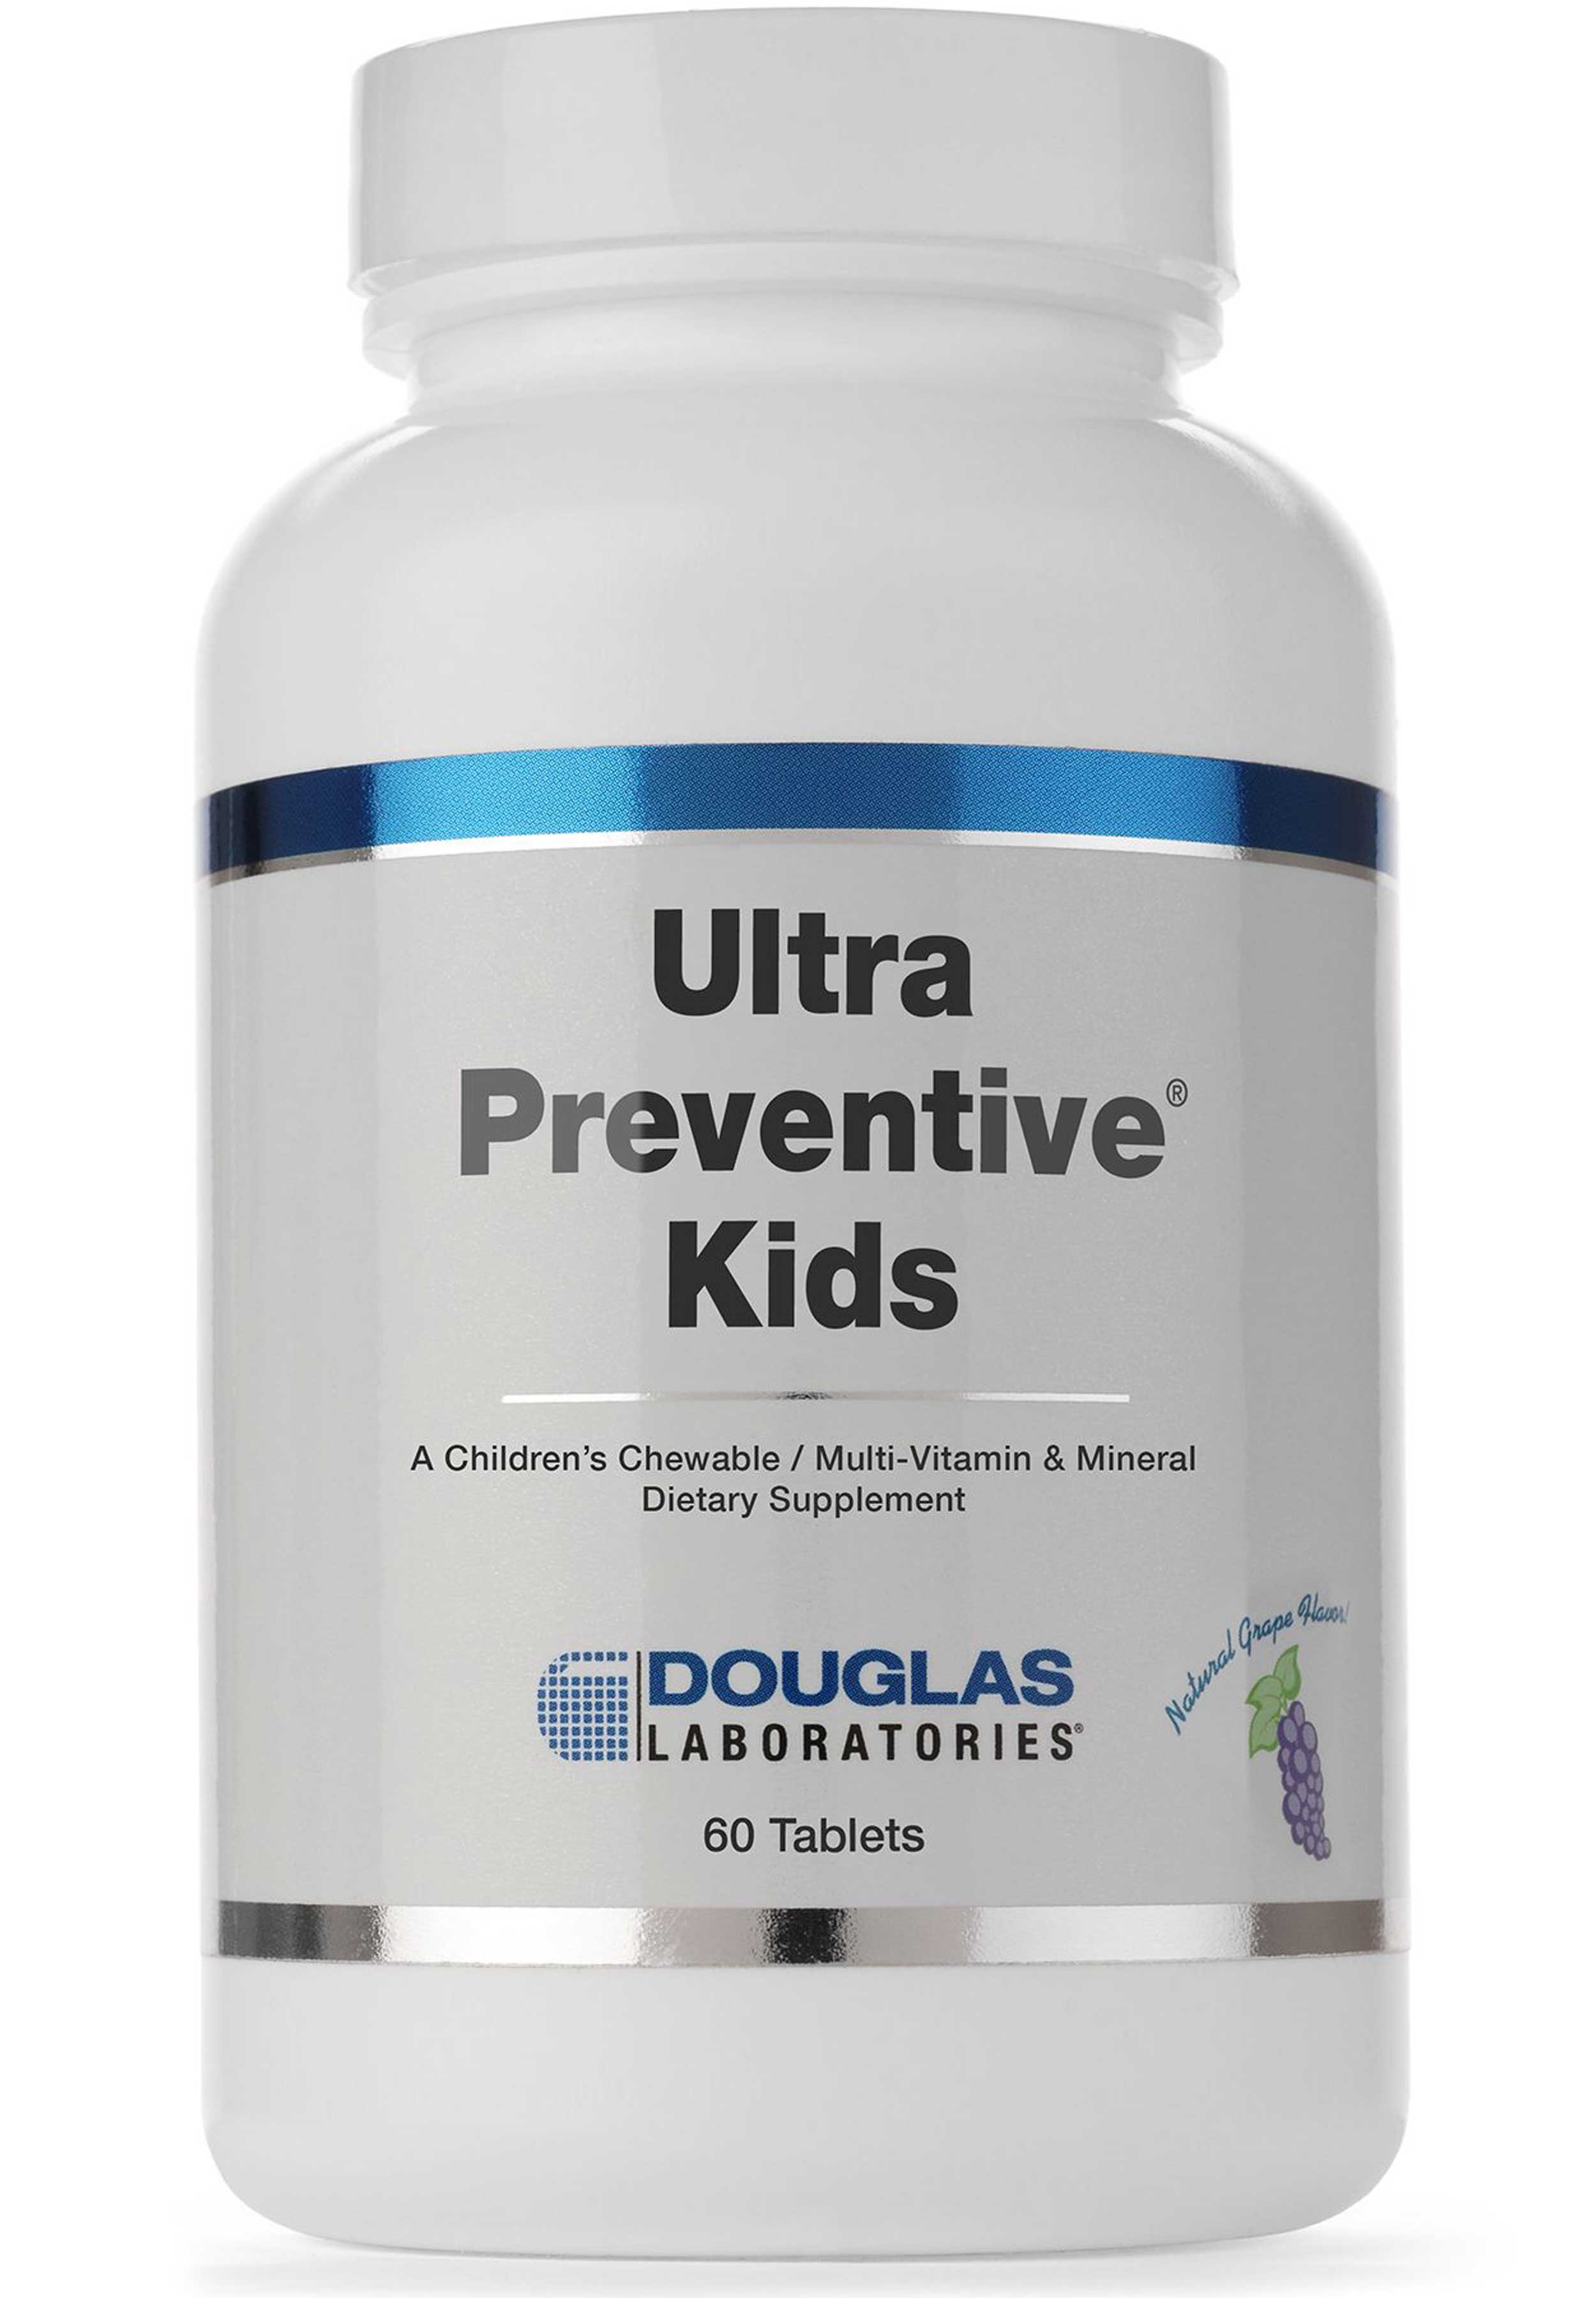 Douglas Laboratories Ultra Preventive Kids